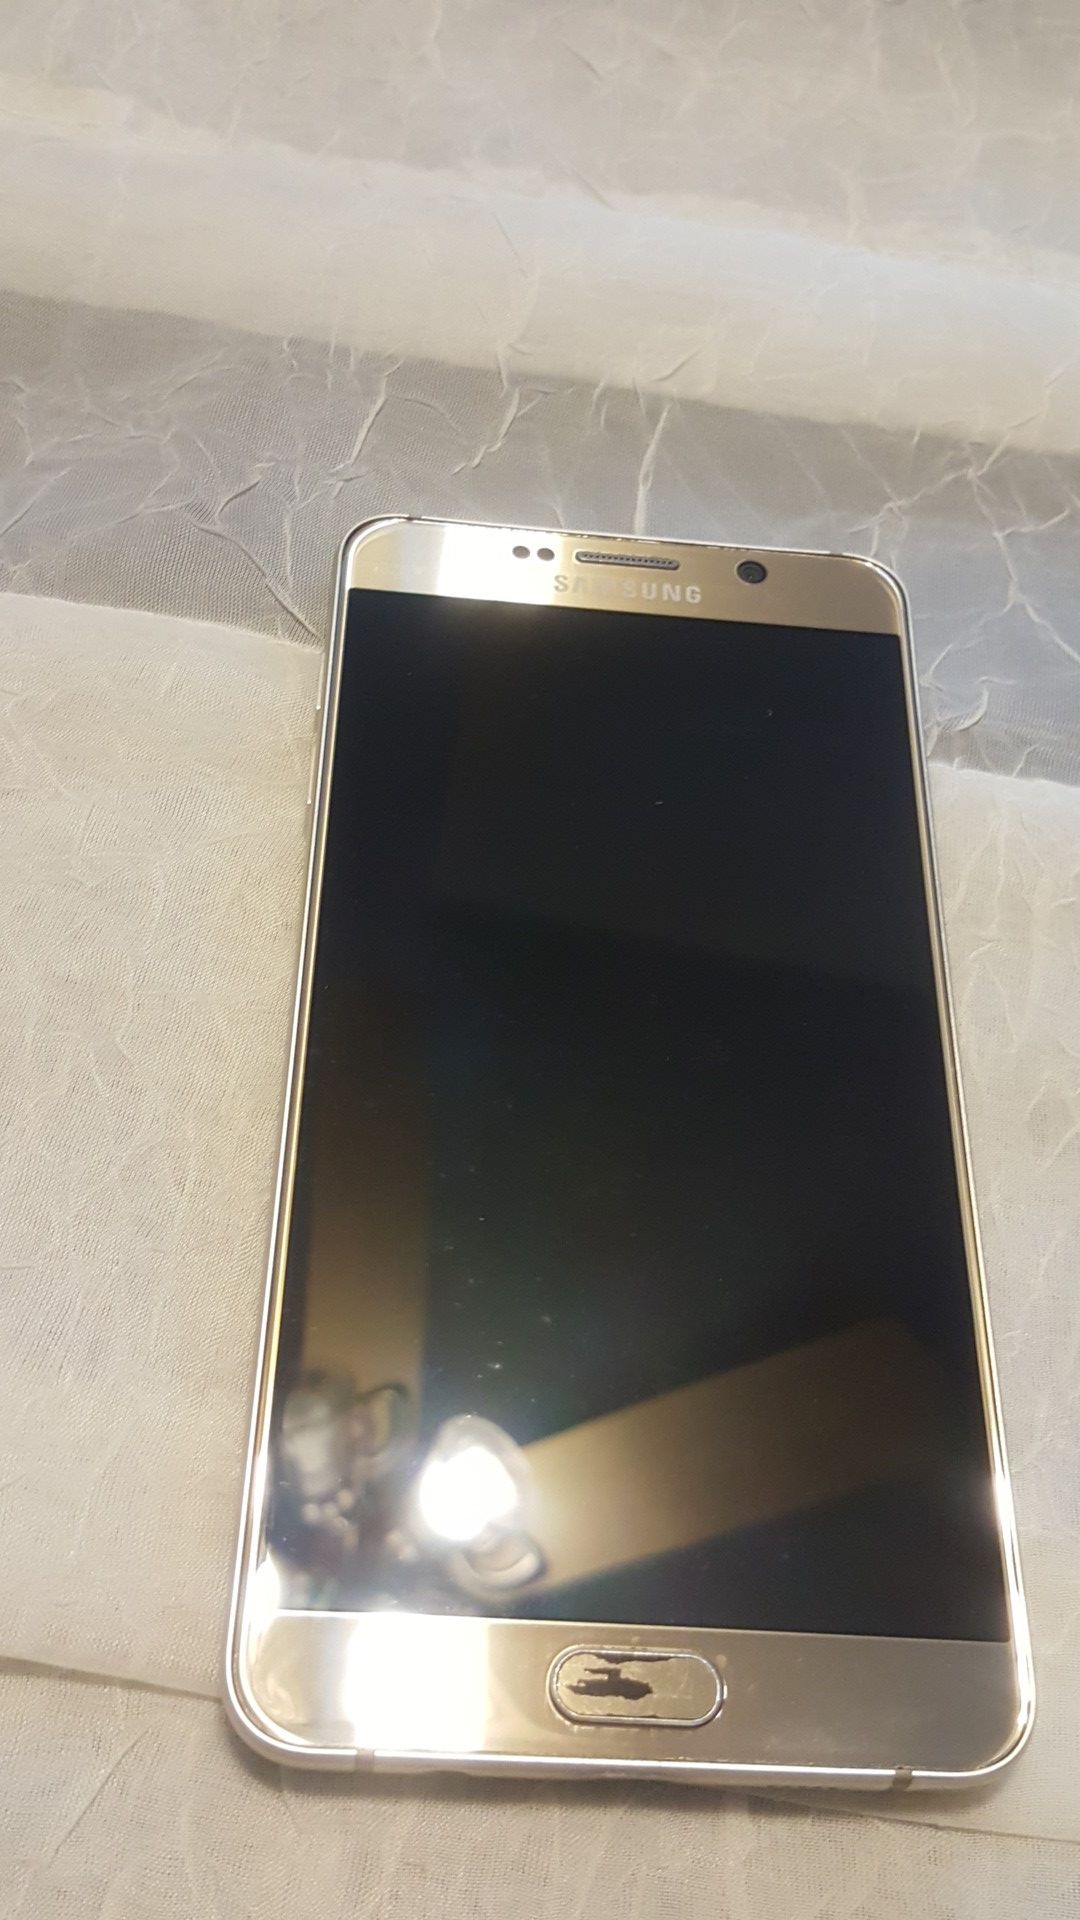 Samsung galaxy note 5 32gb Gold unlocked.